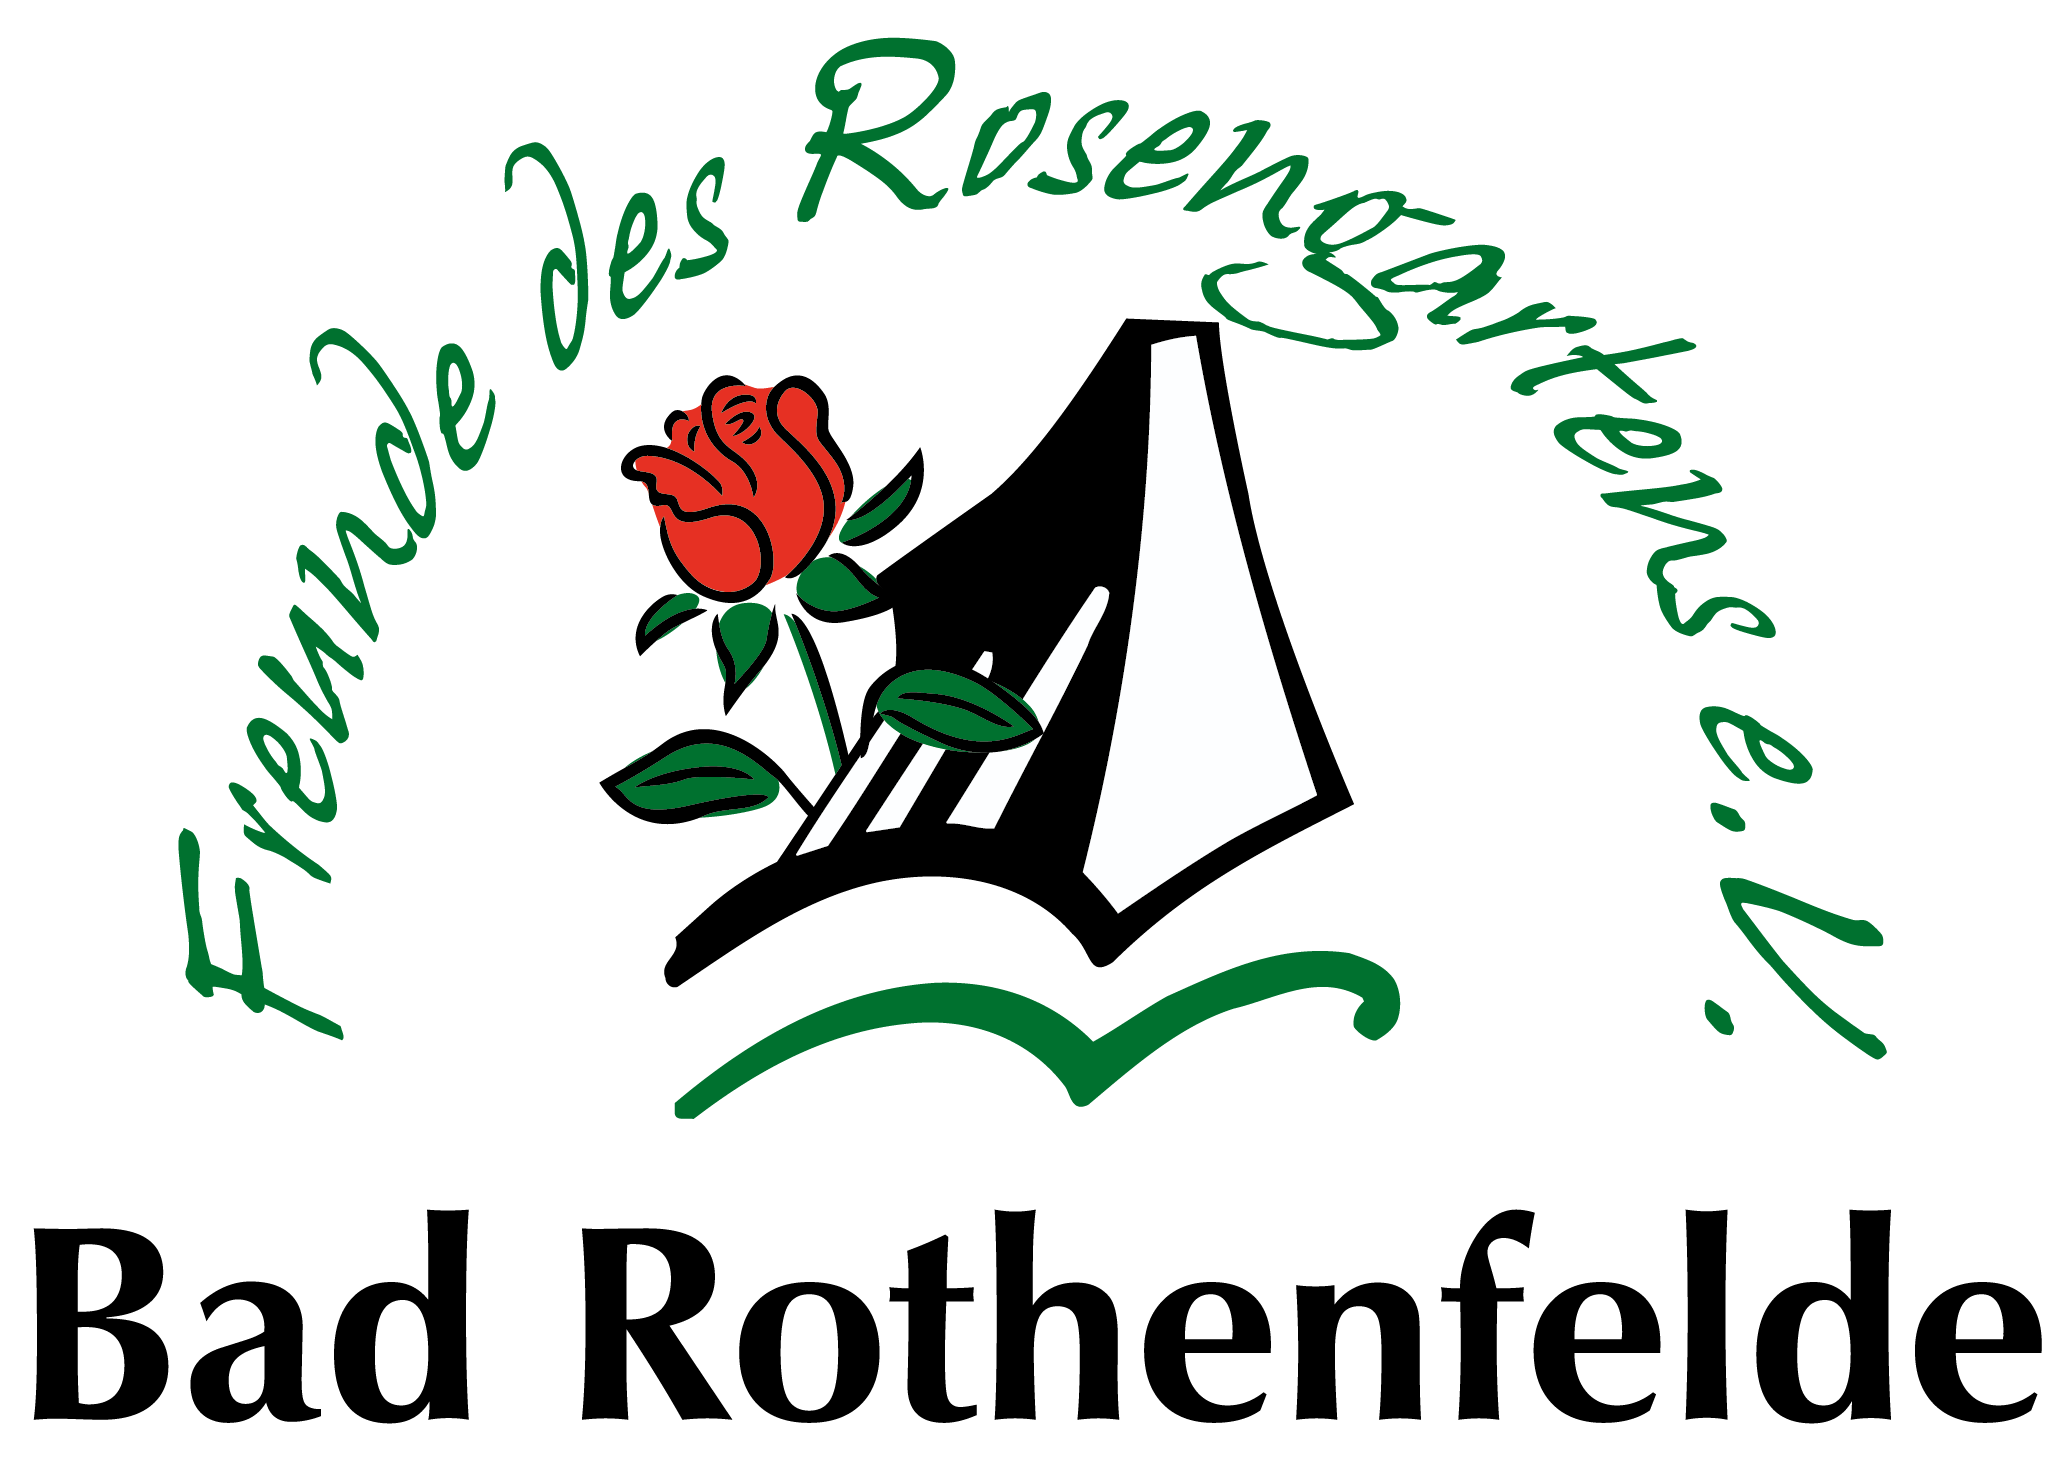 Rudi-Wernemann-Rosengarten Bad Rothenfelde logo